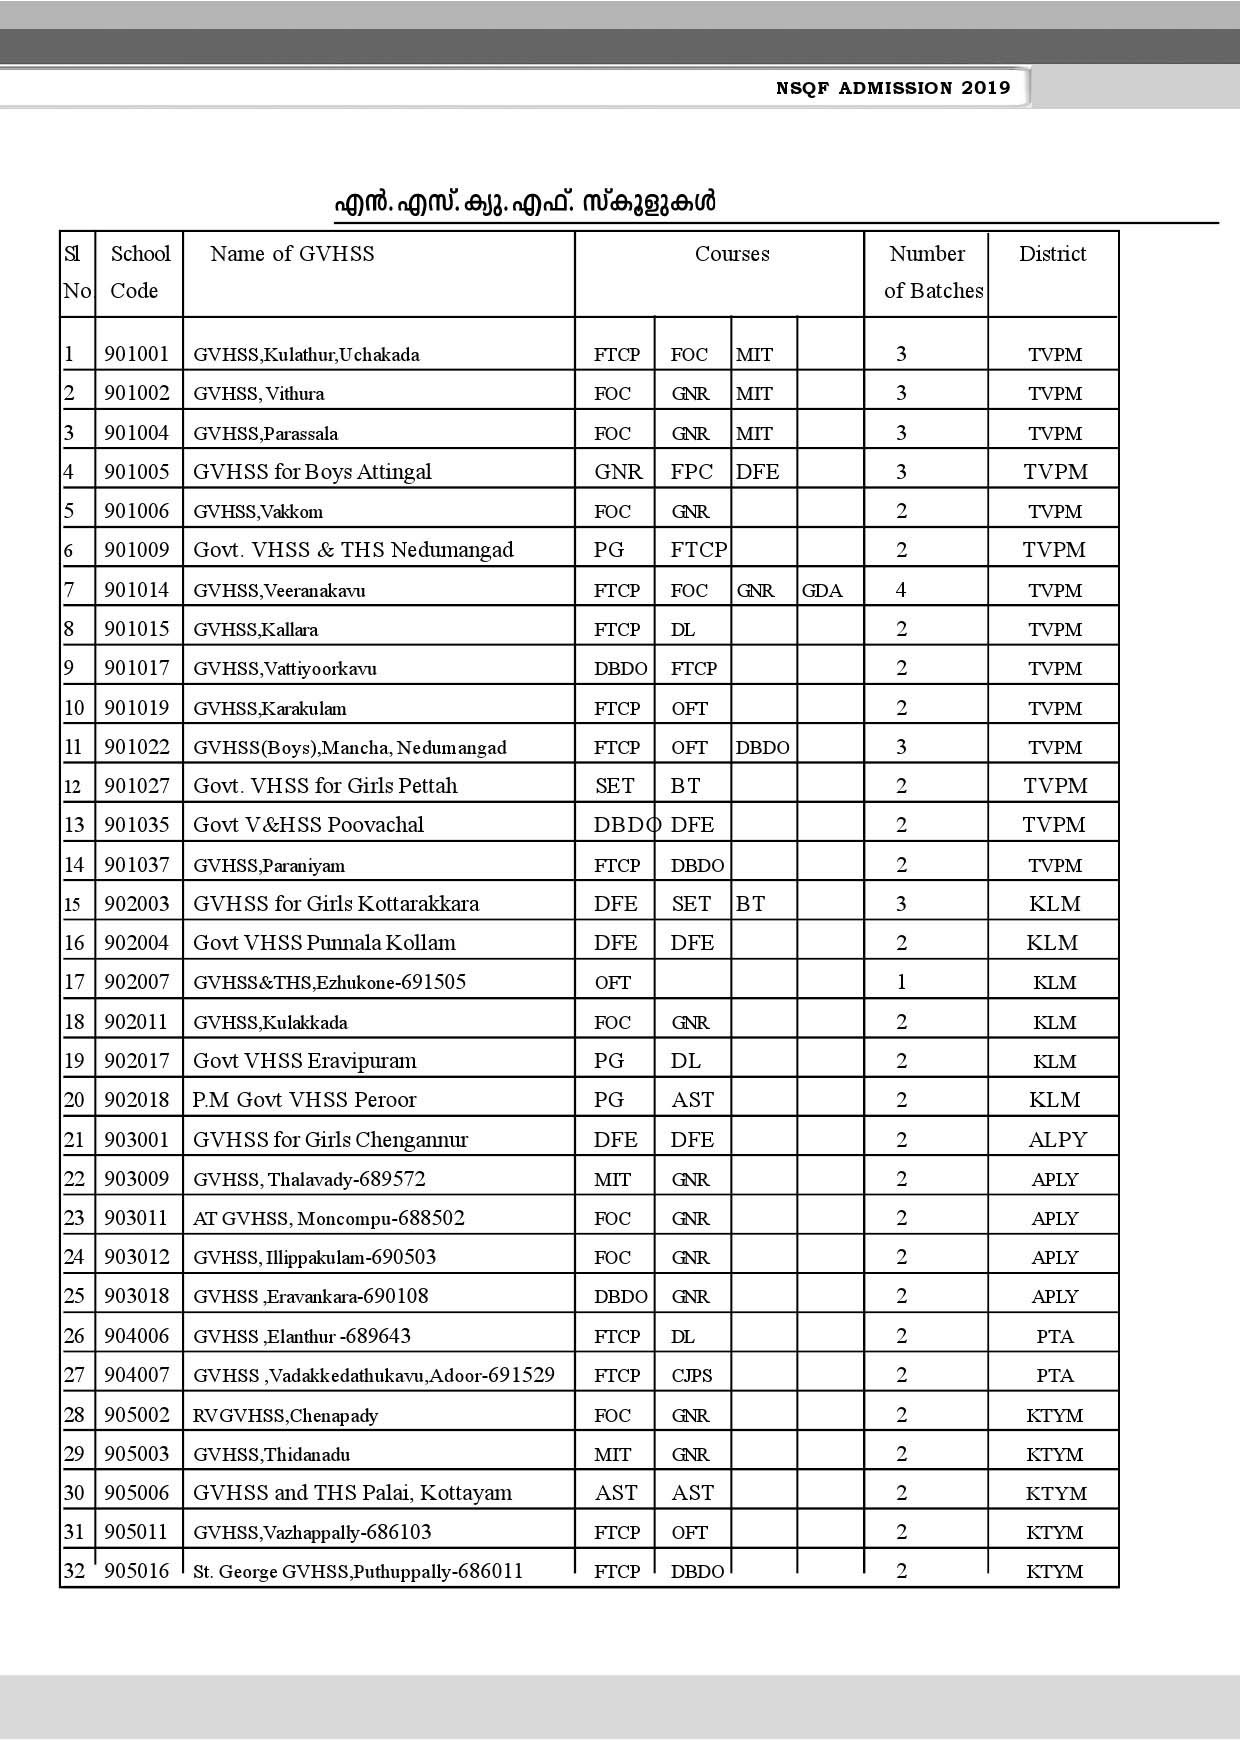 NSQF Kerala Schools Admission 2019 - Notification Image 1